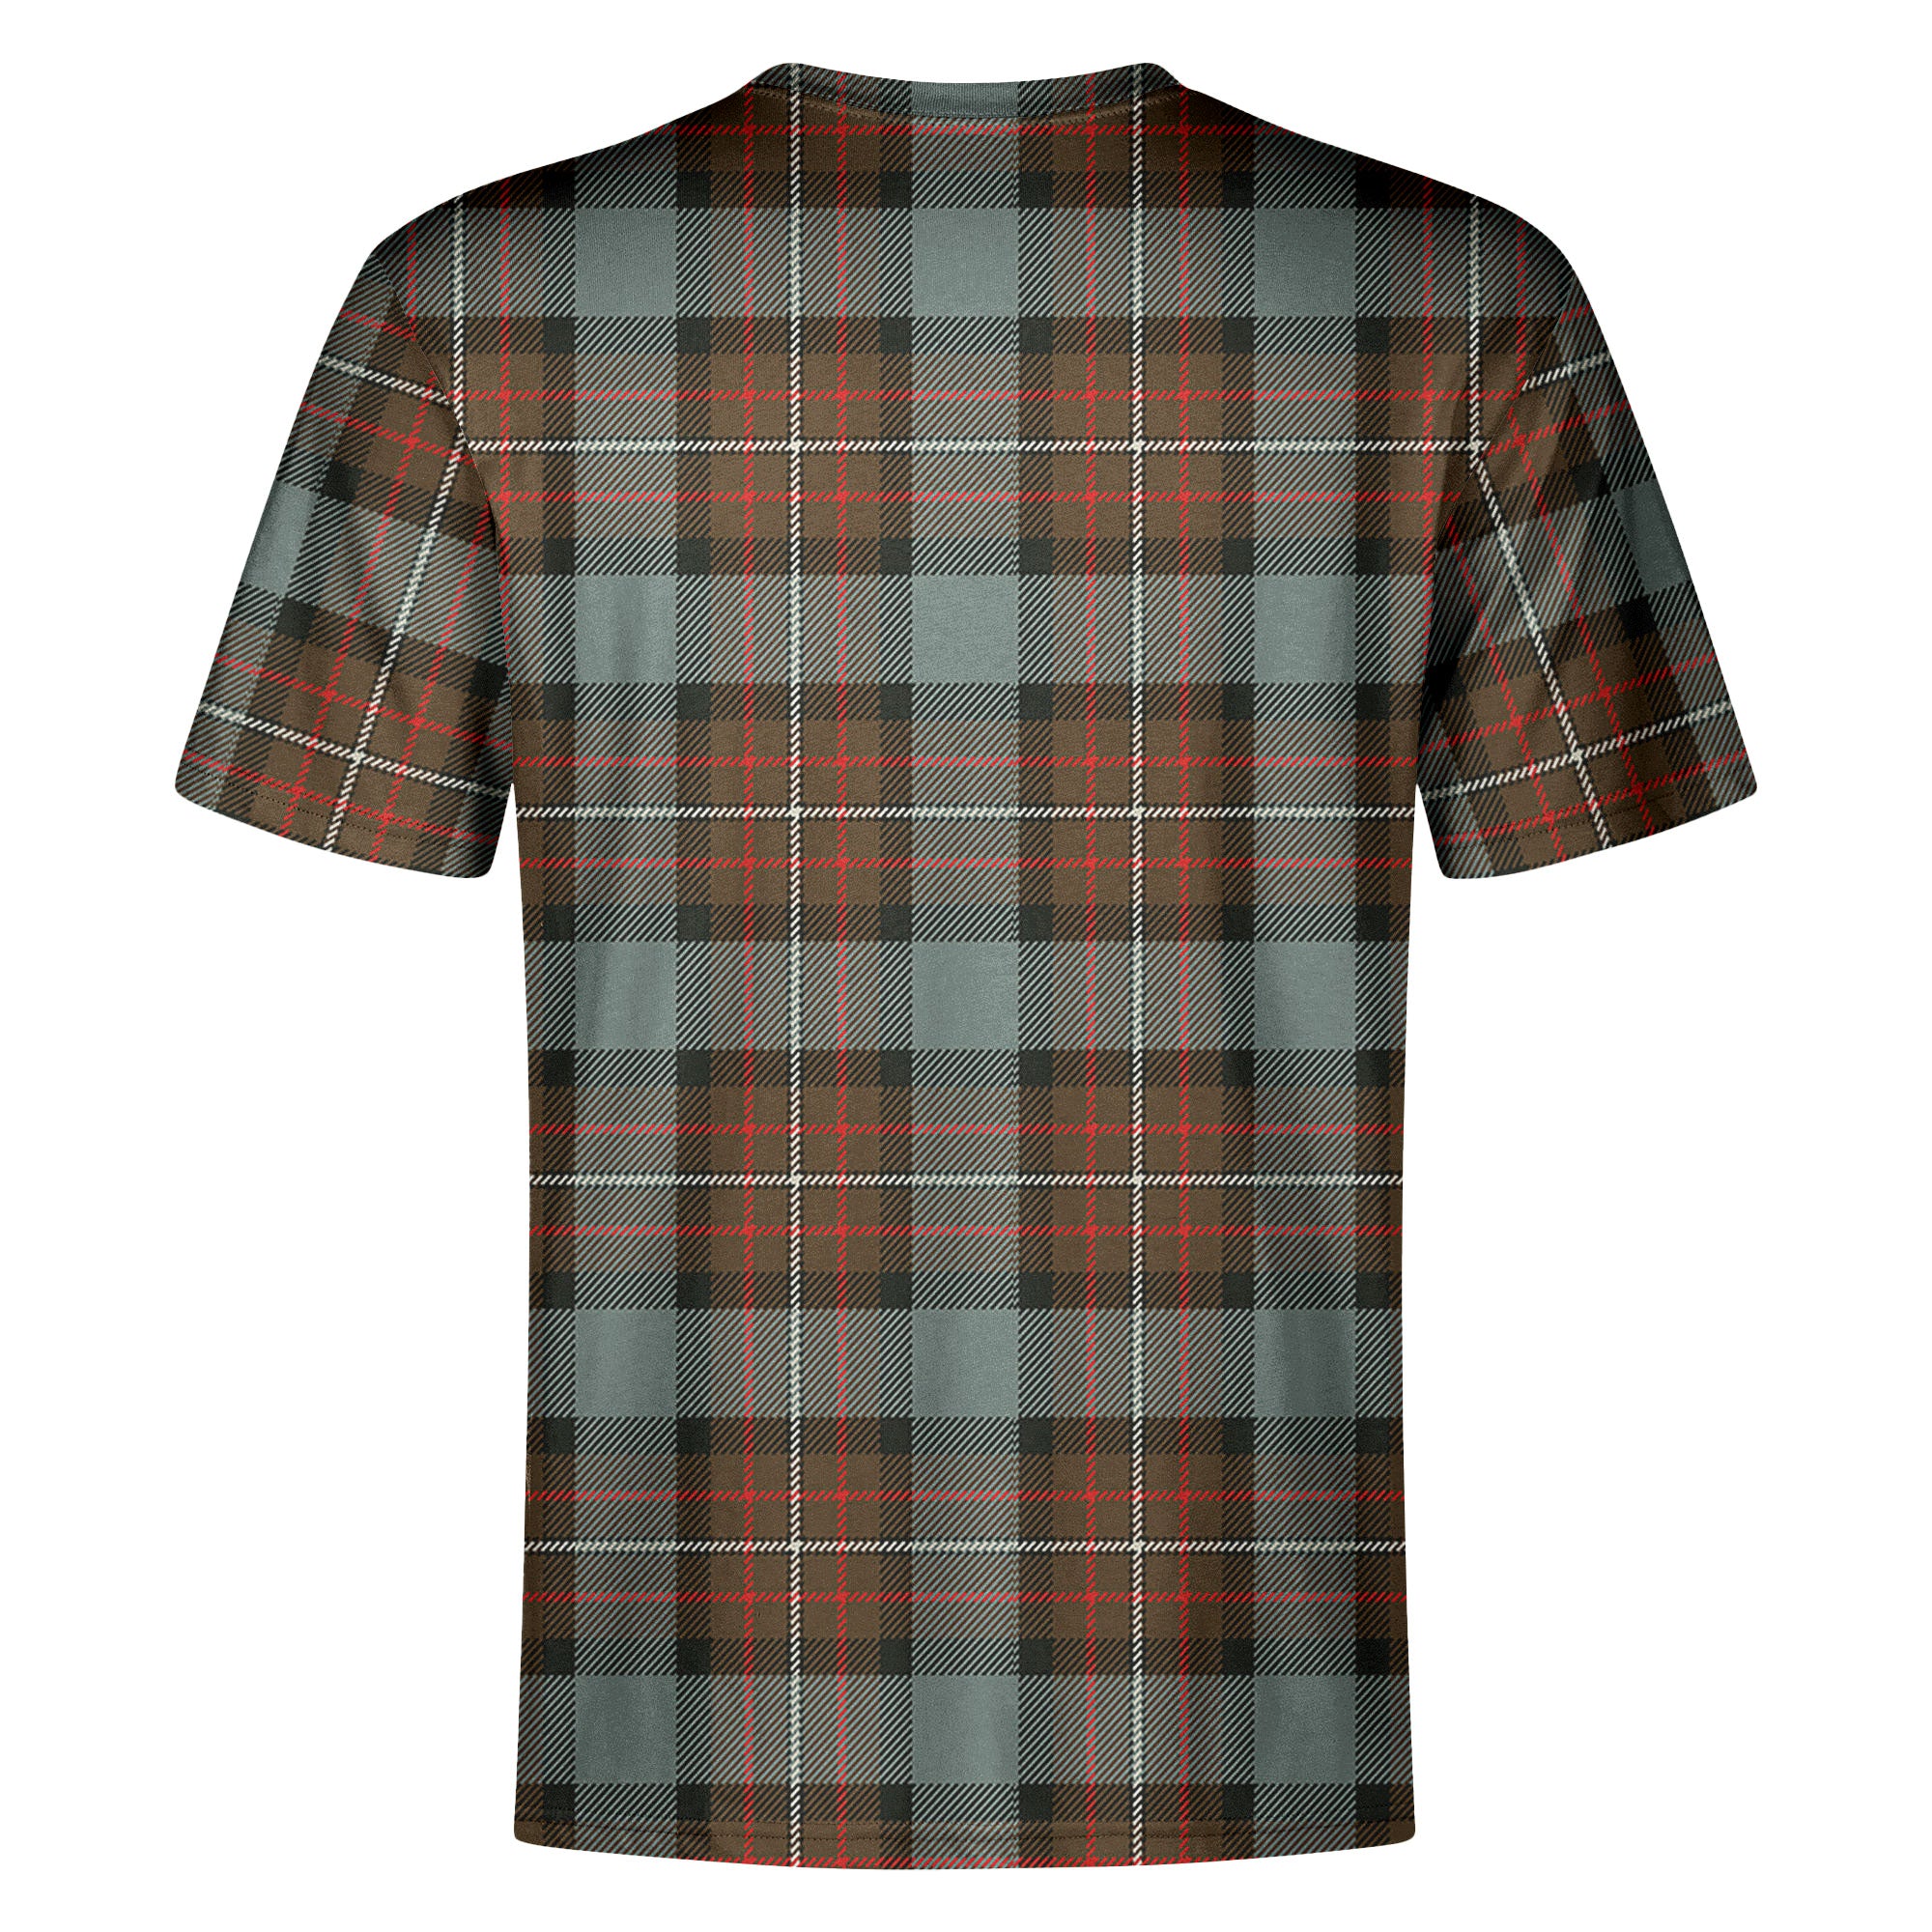 Fergusson Weathered Tartan Crest T-shirt